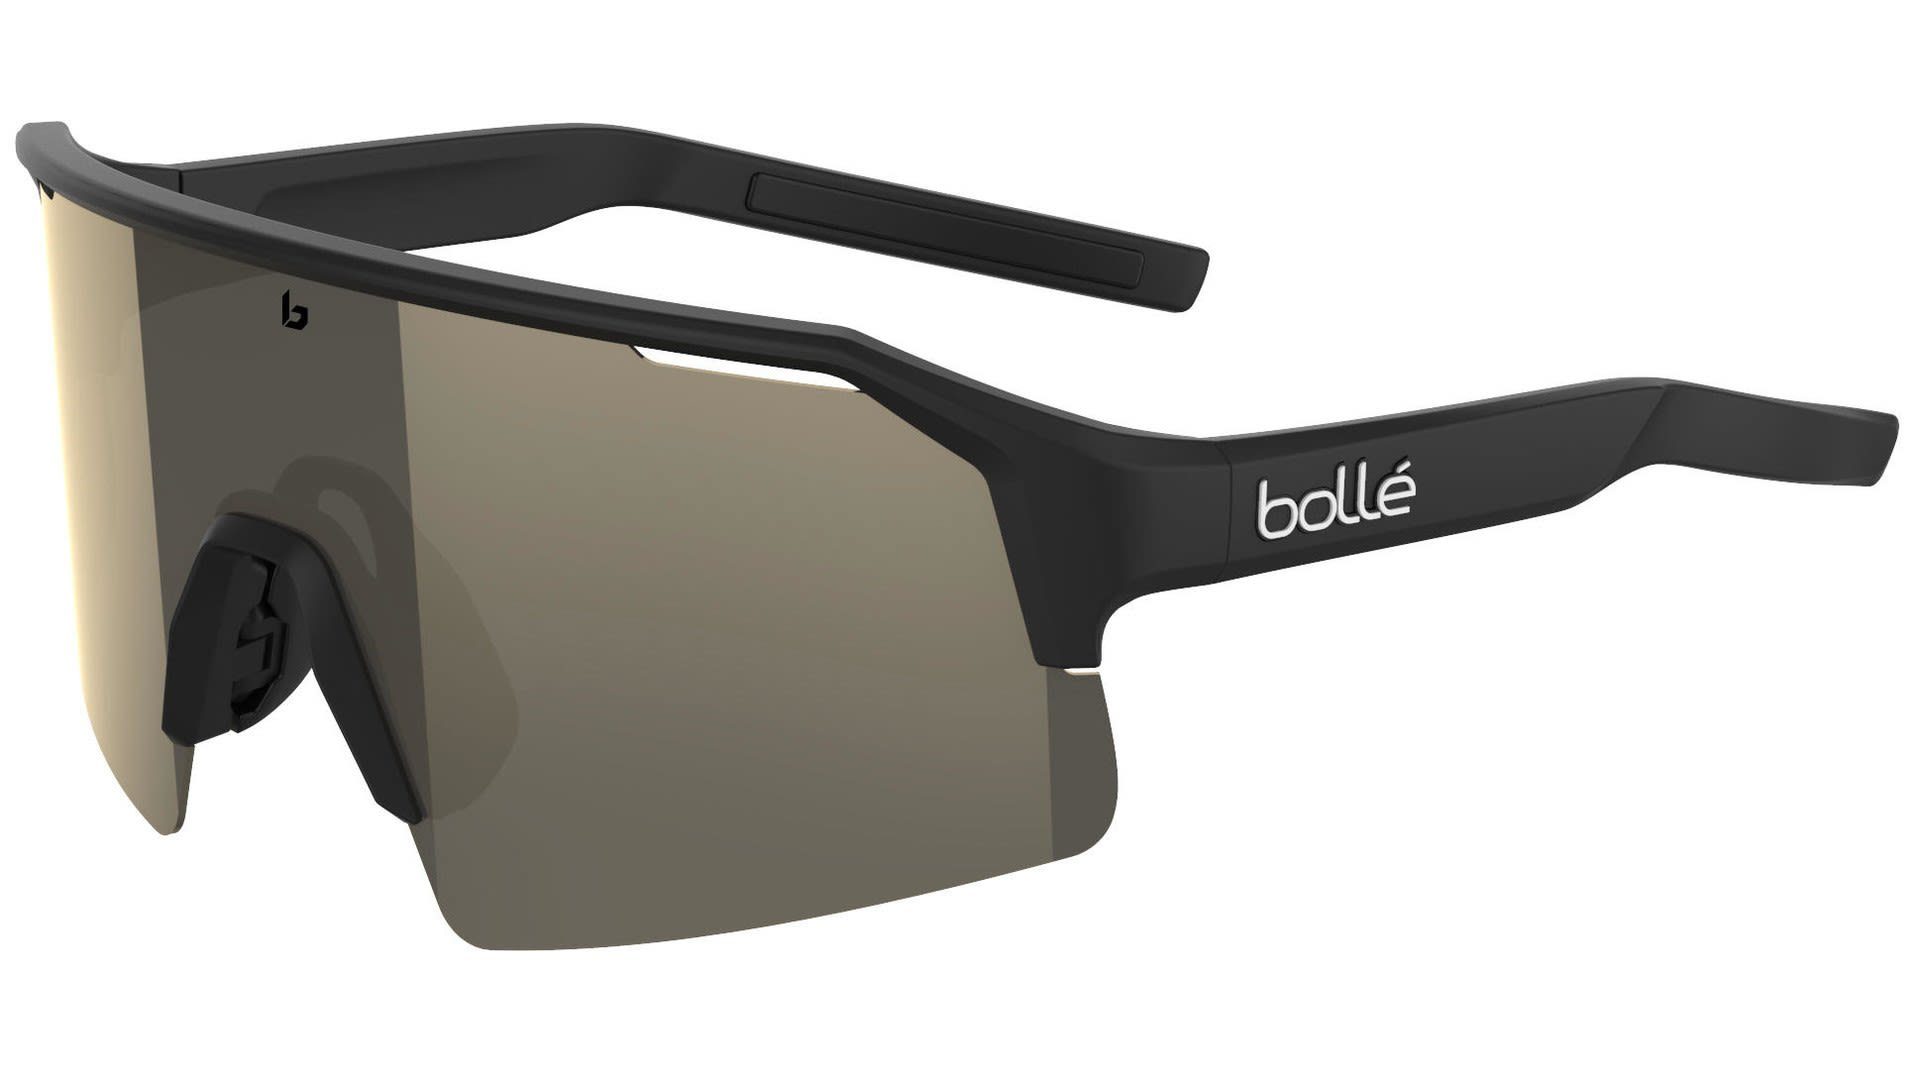 Bolle Classic Sportbrille C-shifter Accessoires Bolle